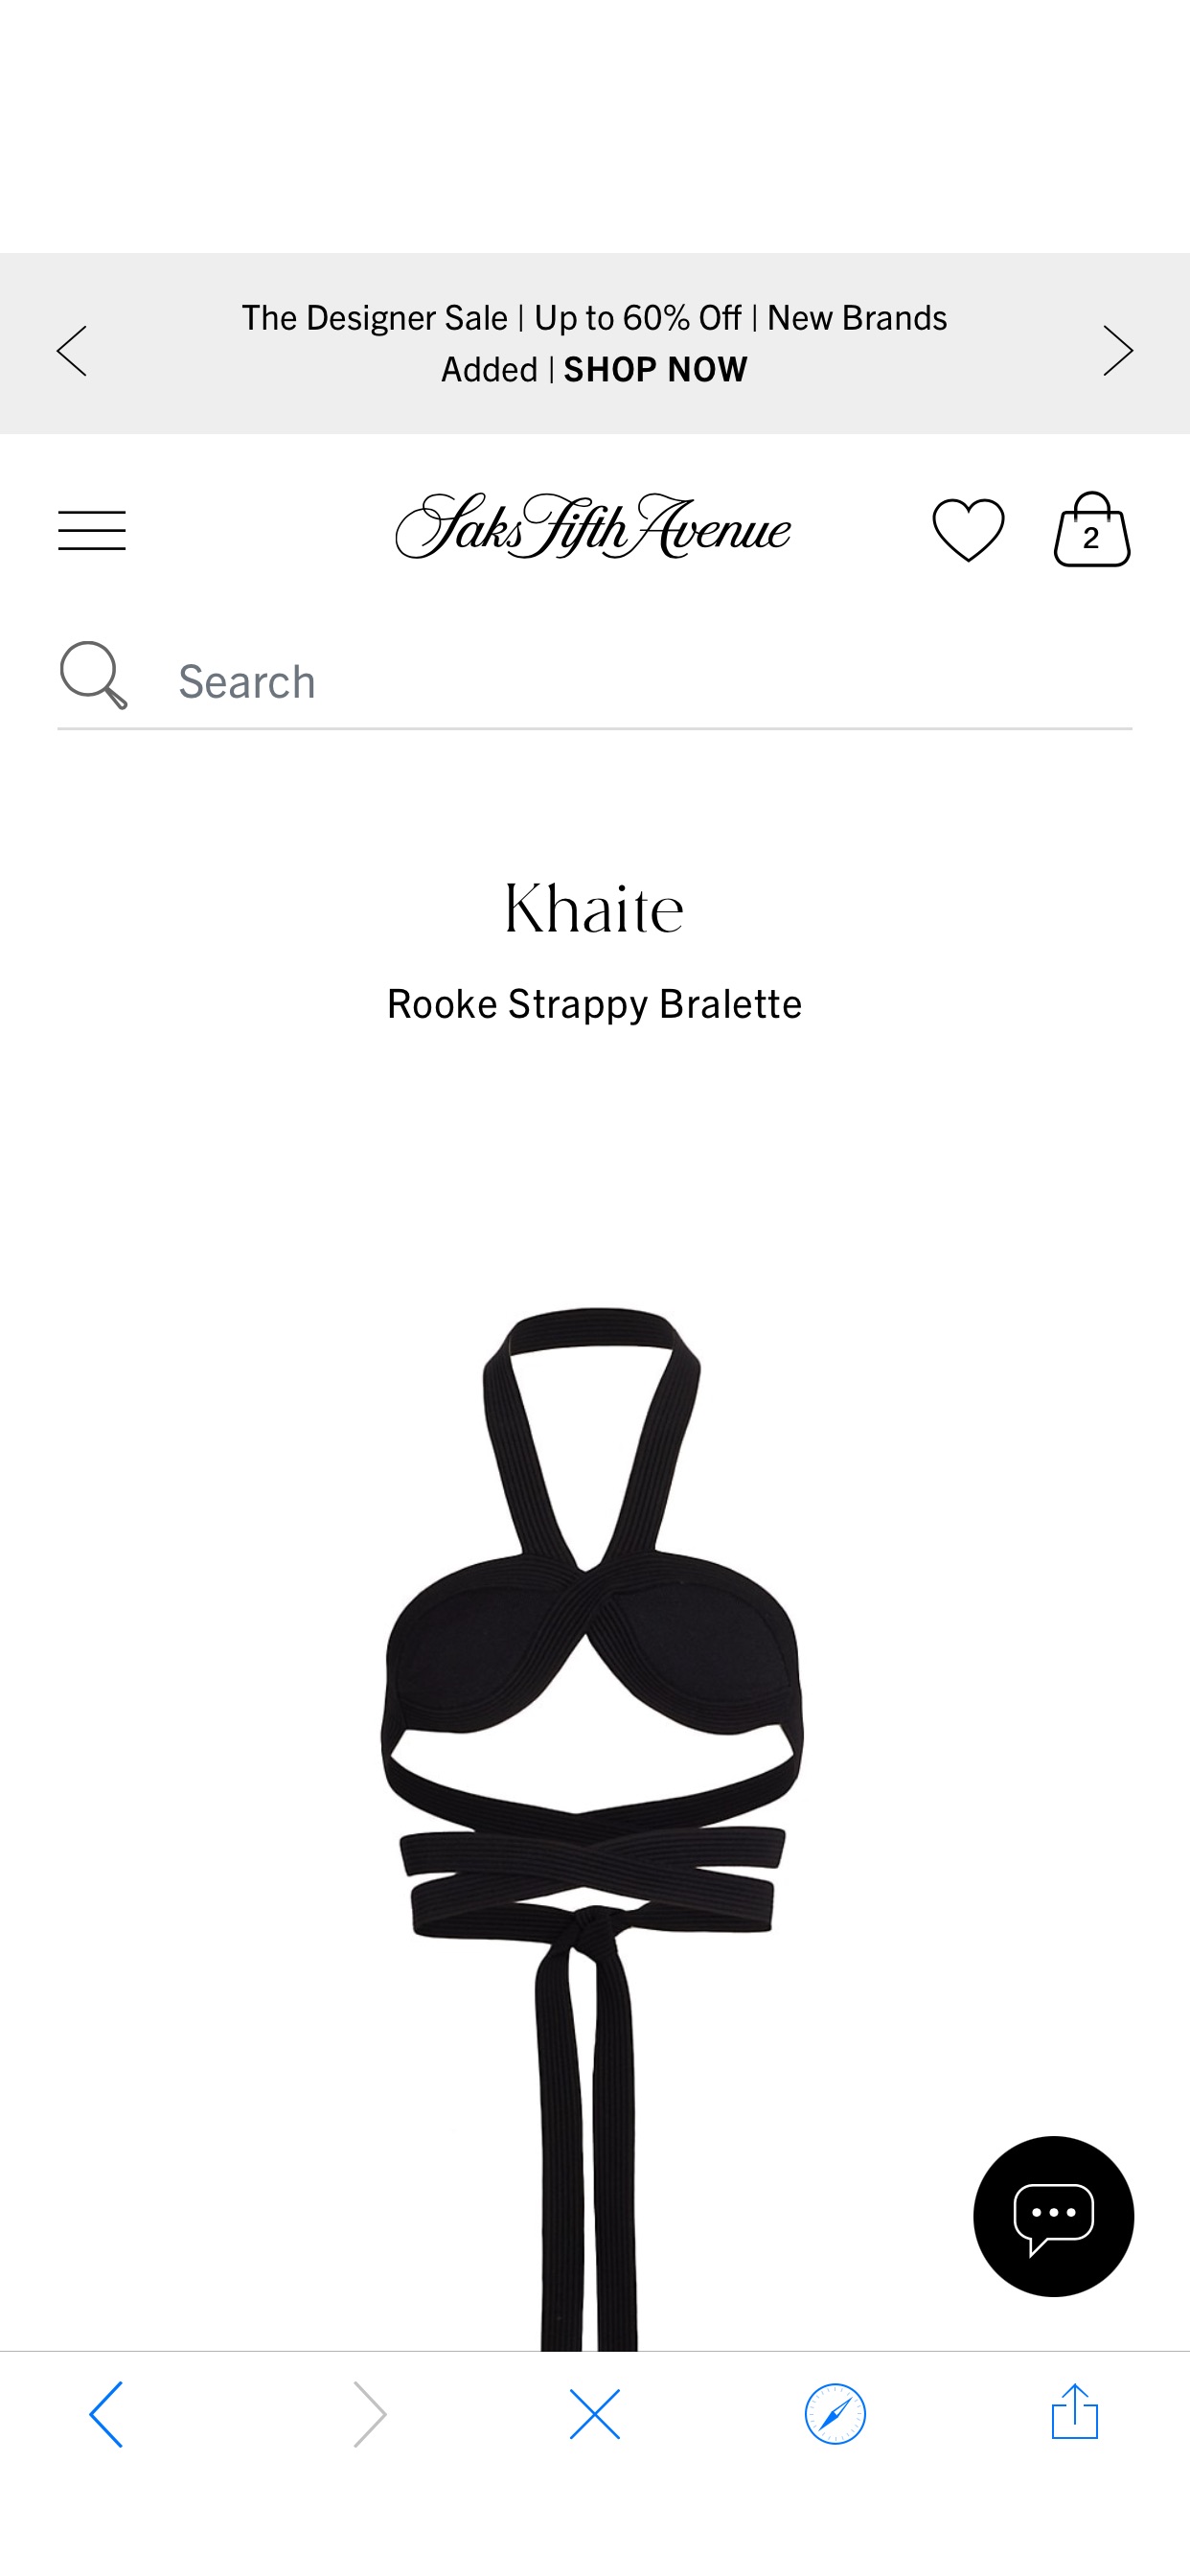 Shop Khaite Rooke Strappy Bralette | Saks Fifth Avenue
上衣